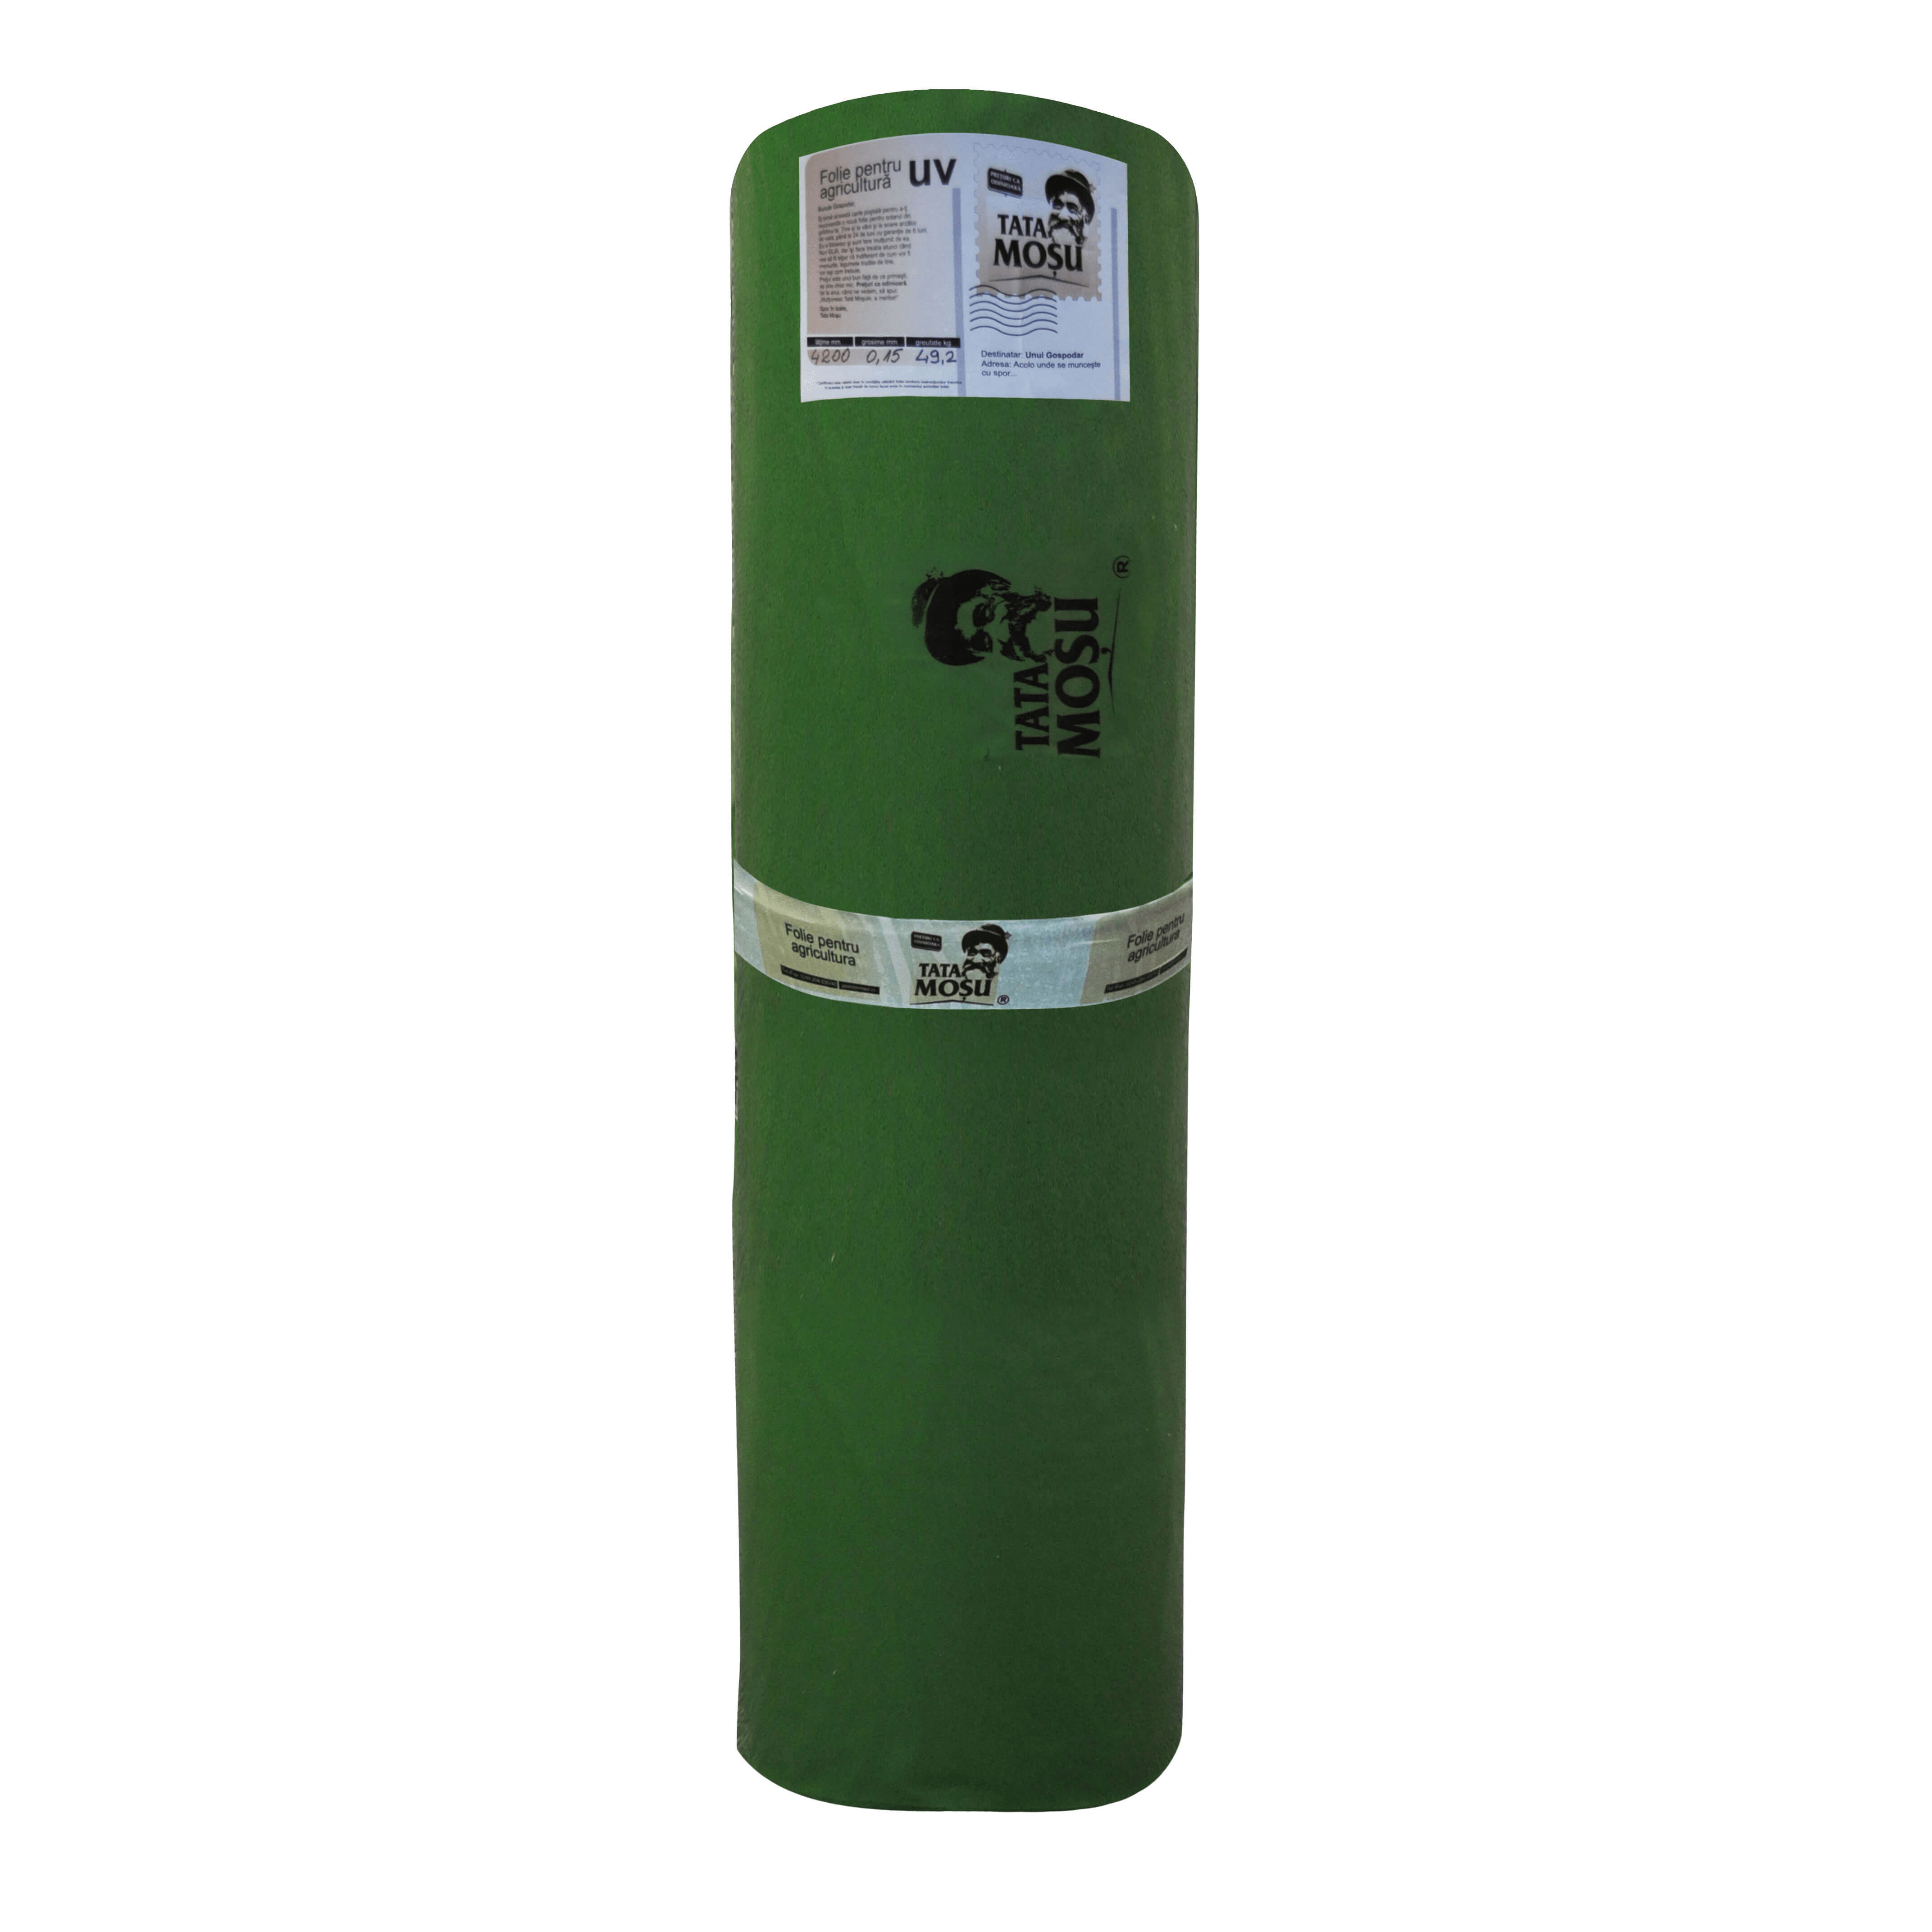 Folie polietilena Tata Mosu, PE reciclat, verde rezistenta UV 12 luni, grosime 0.15 mm, latime 6.2 m 0.15